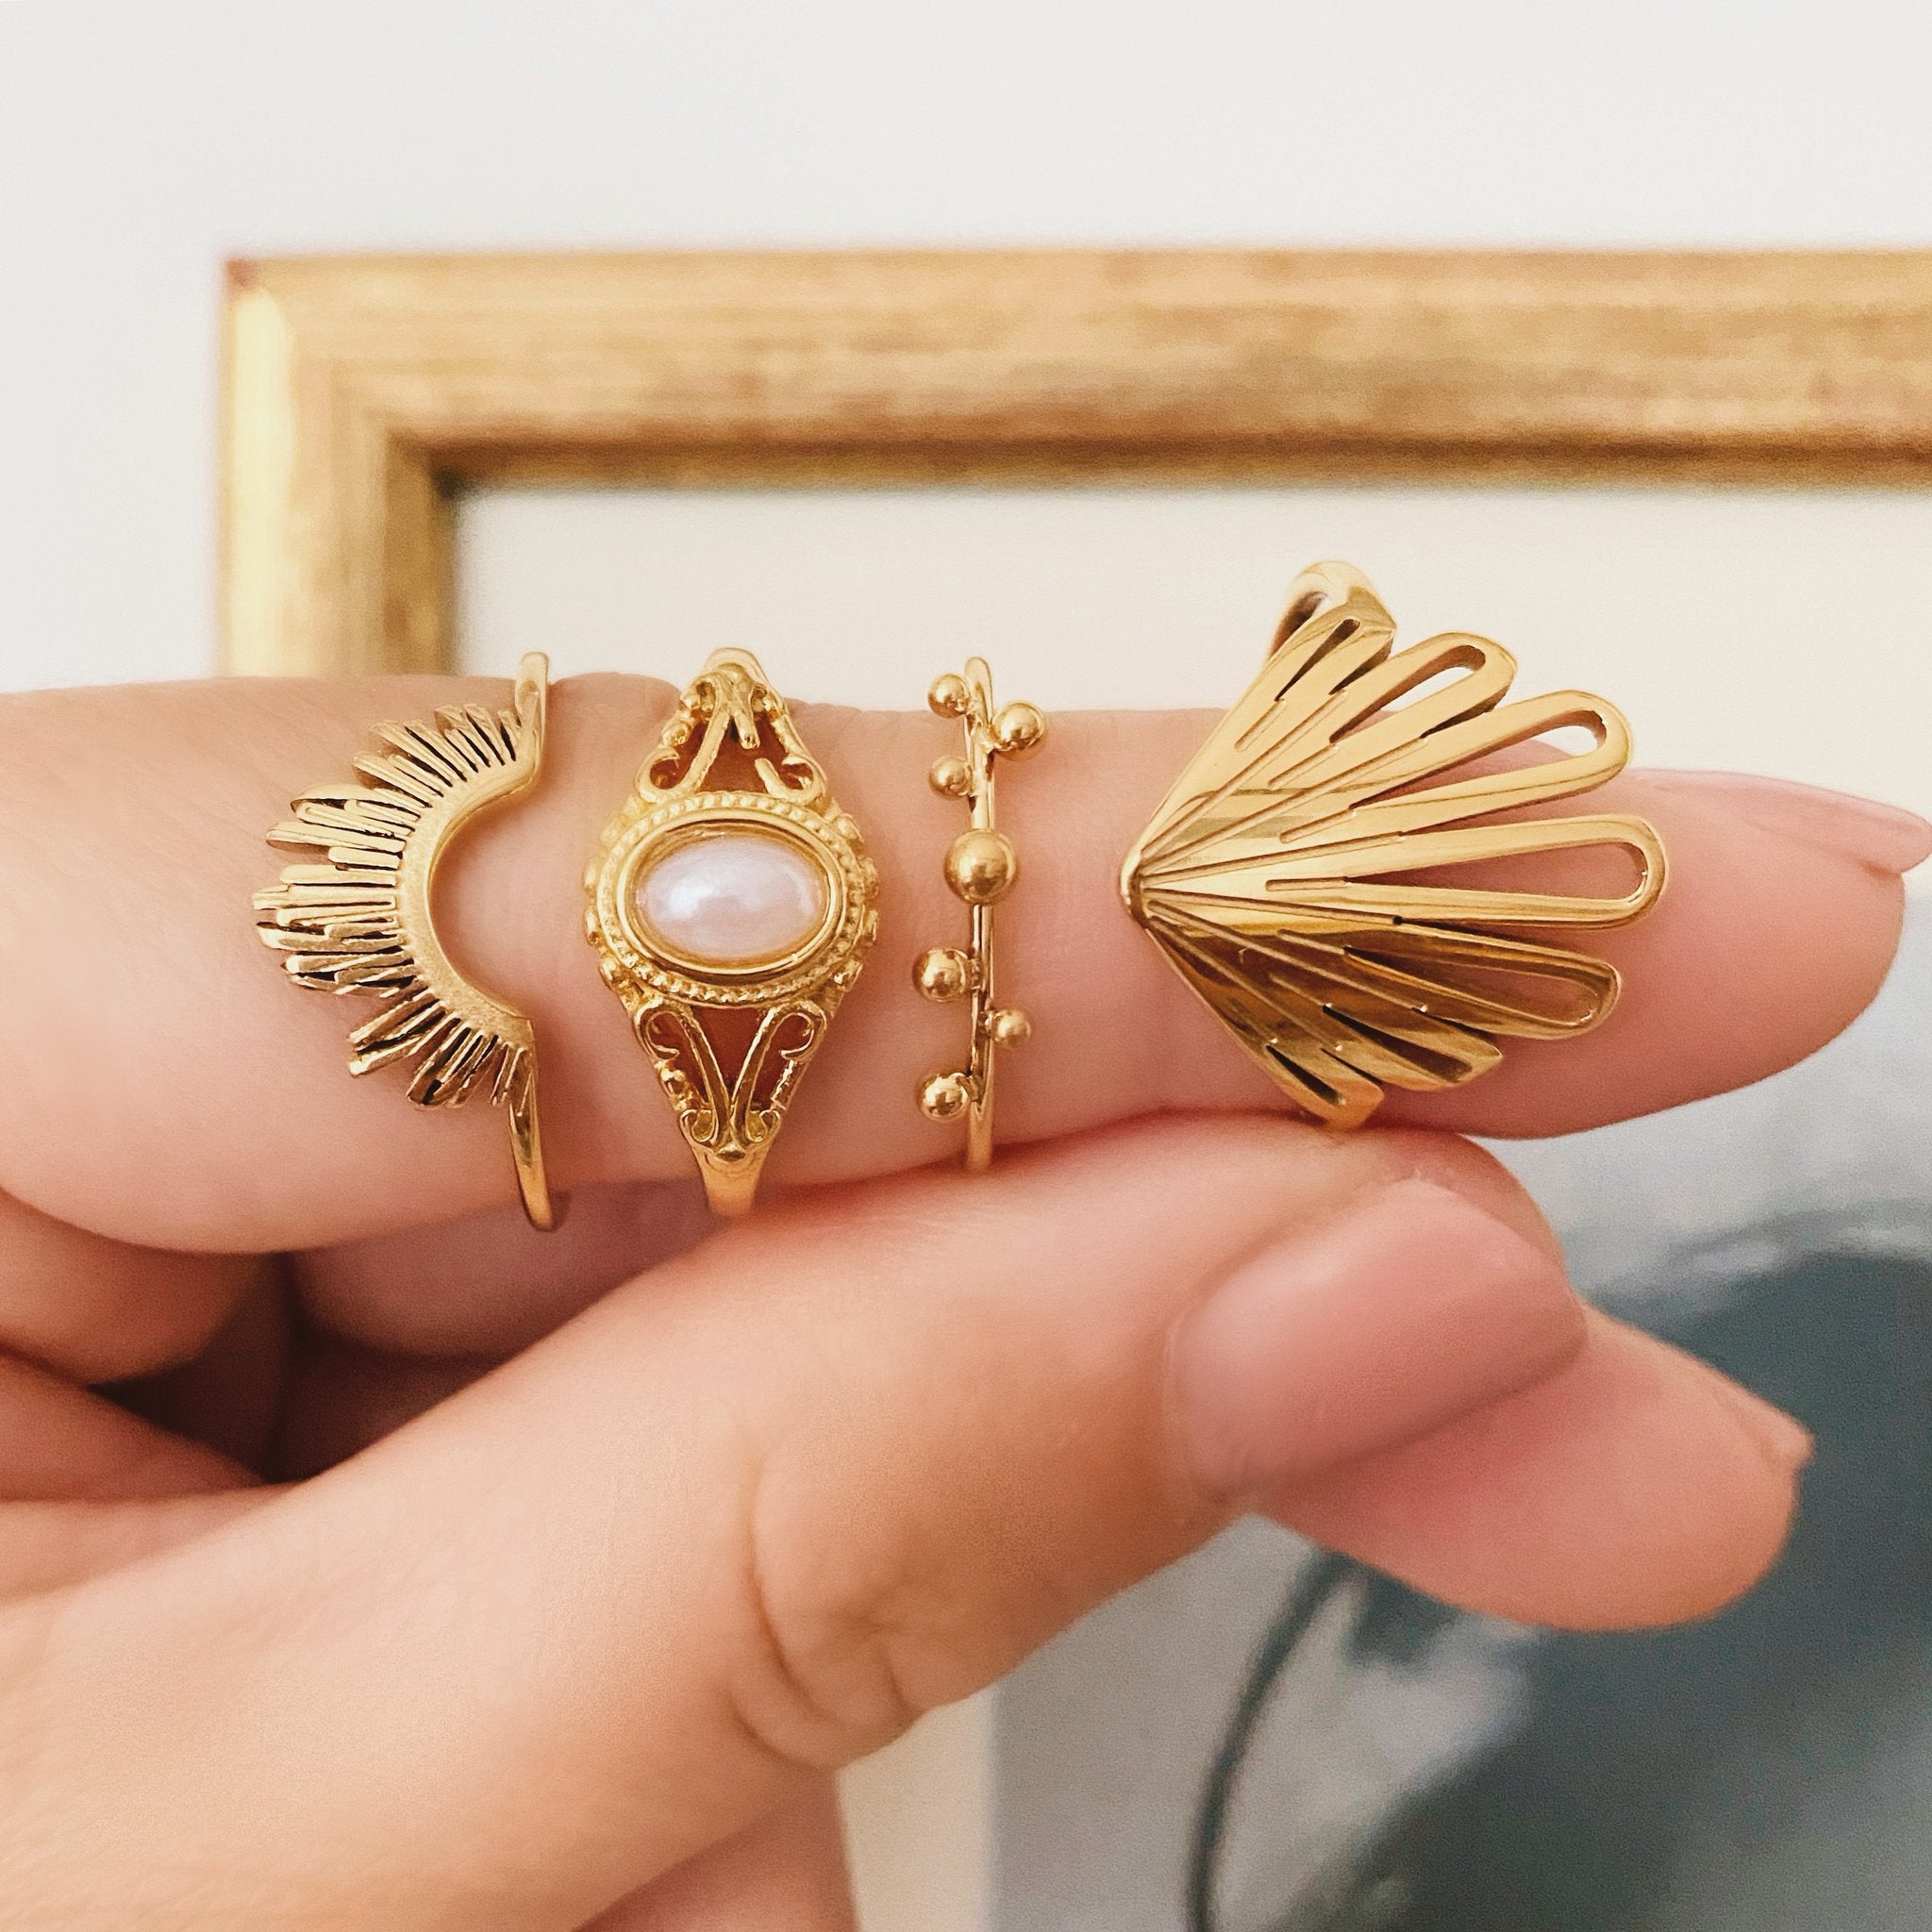 Stalen vintage ring met ovalen parel - goudkleur maat 7